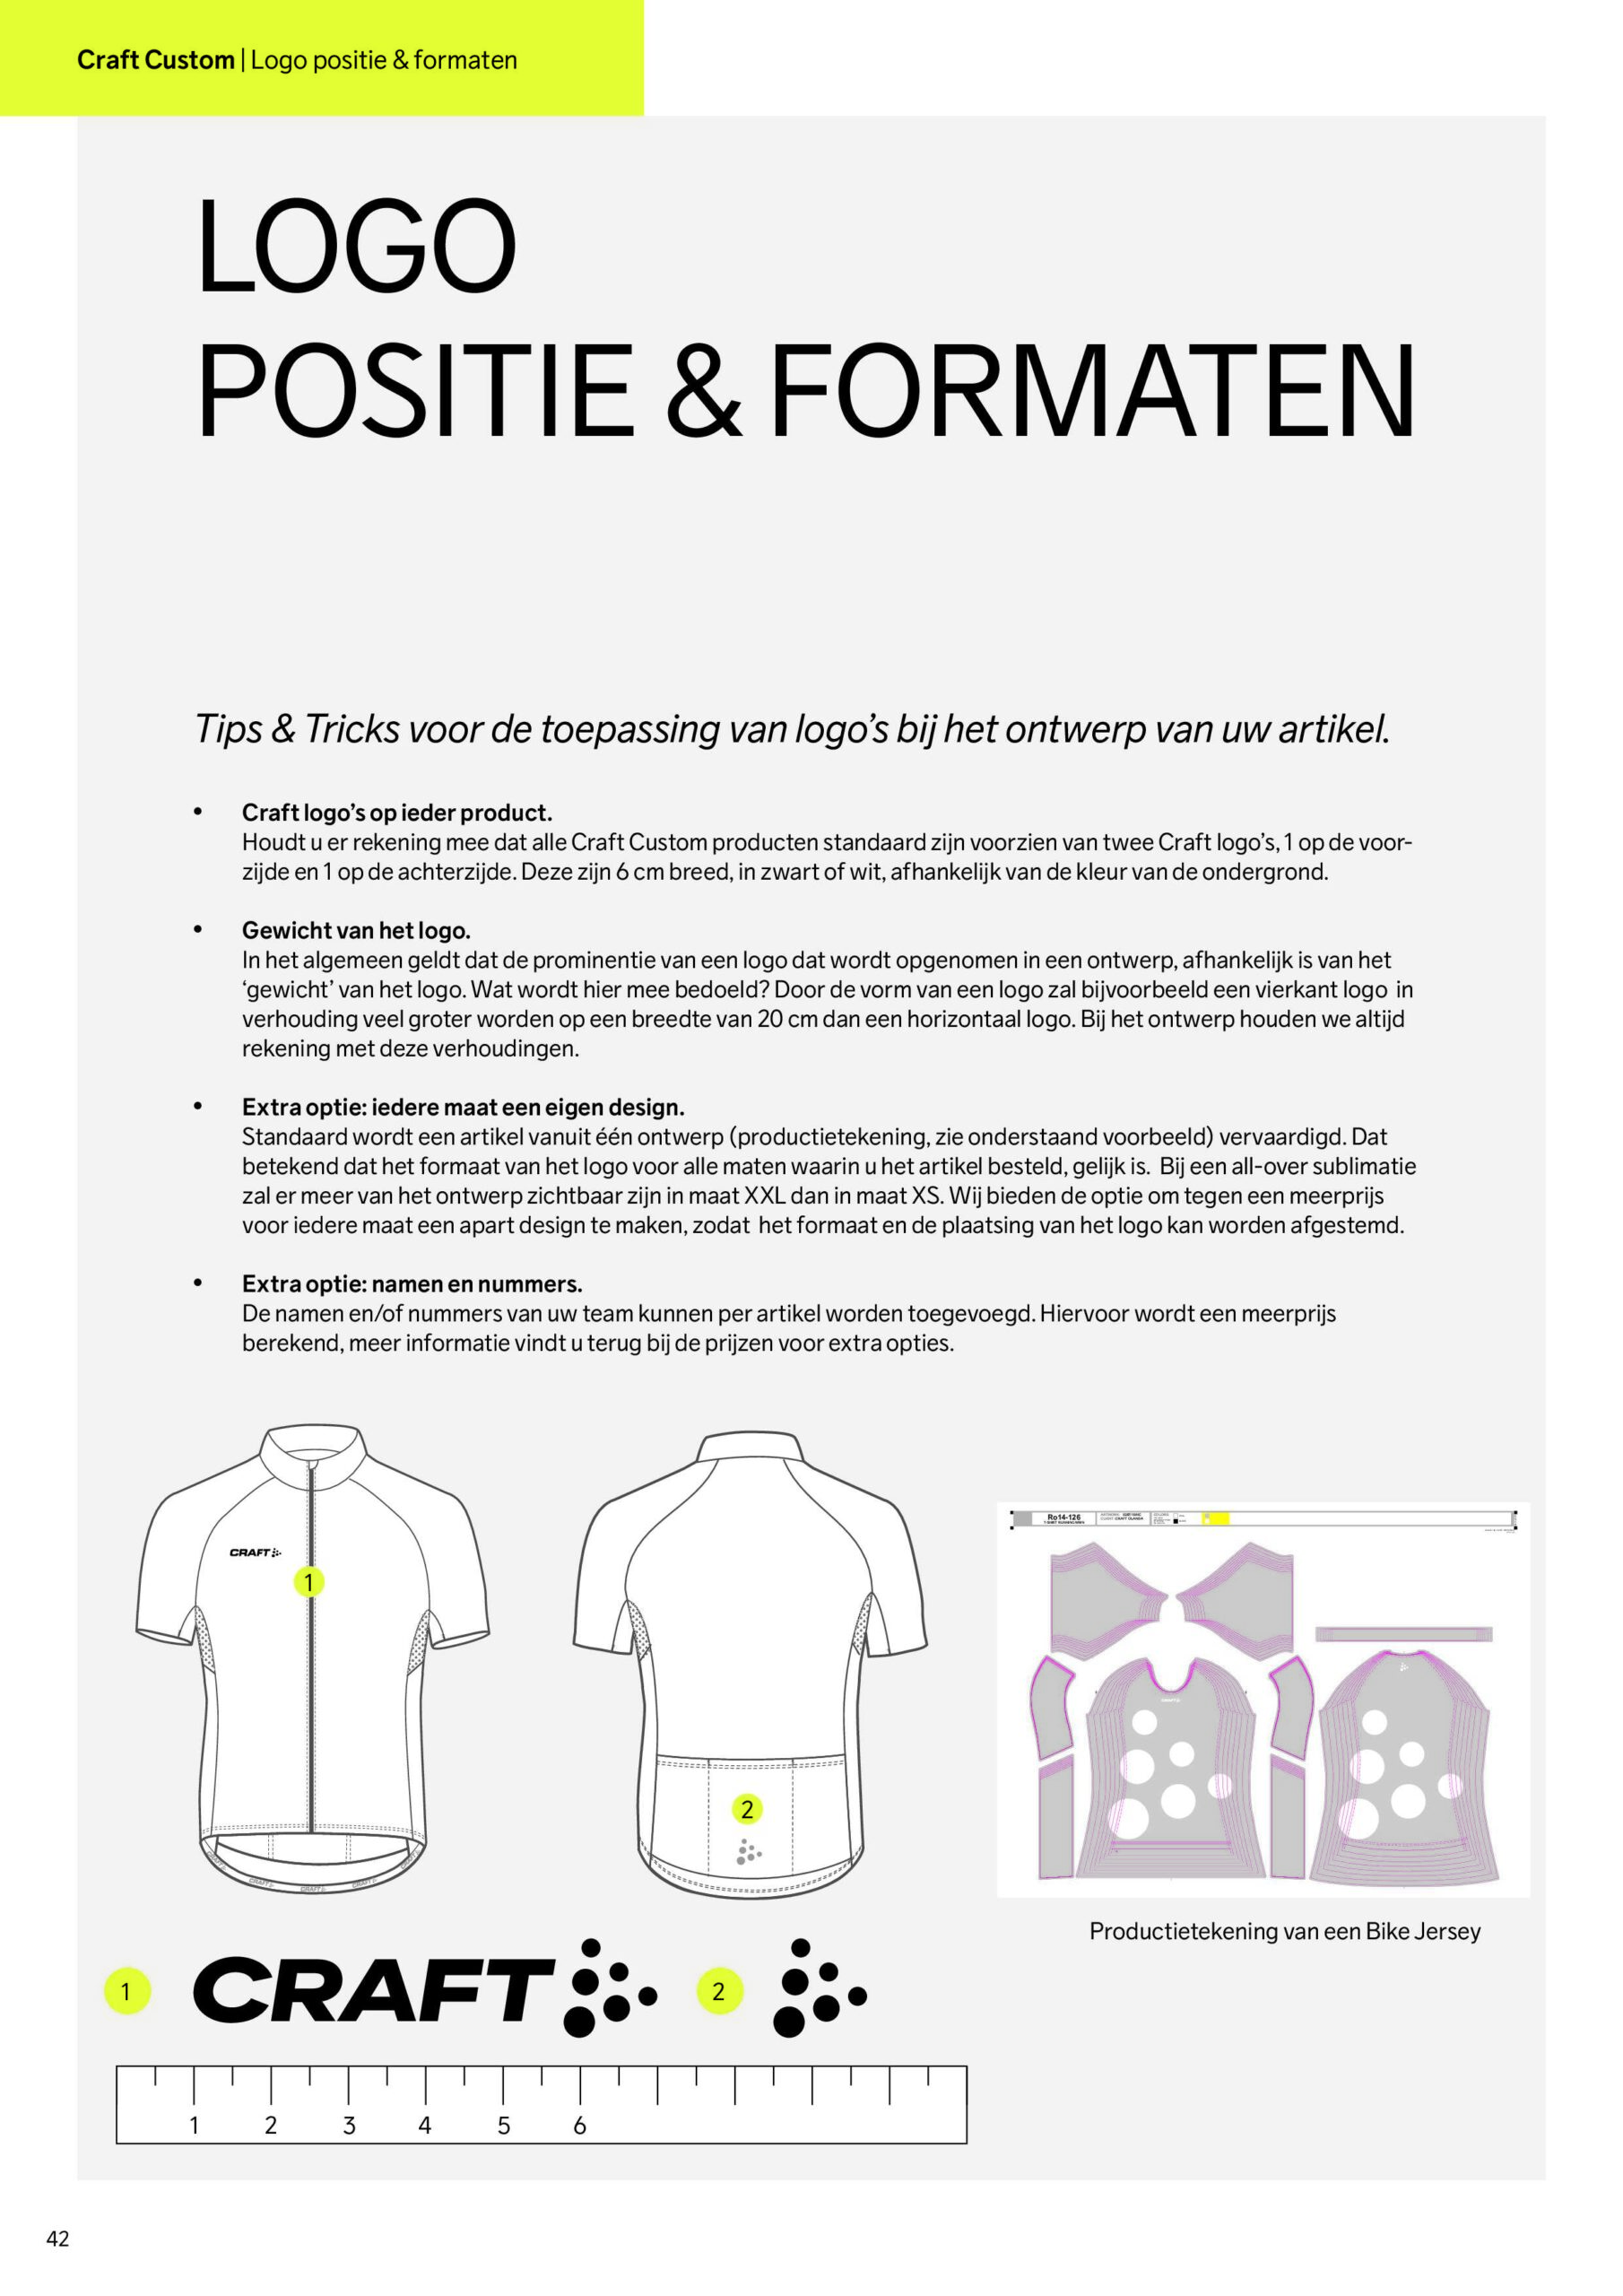 Craft Custom Guide_ Logo positie & formaten-0